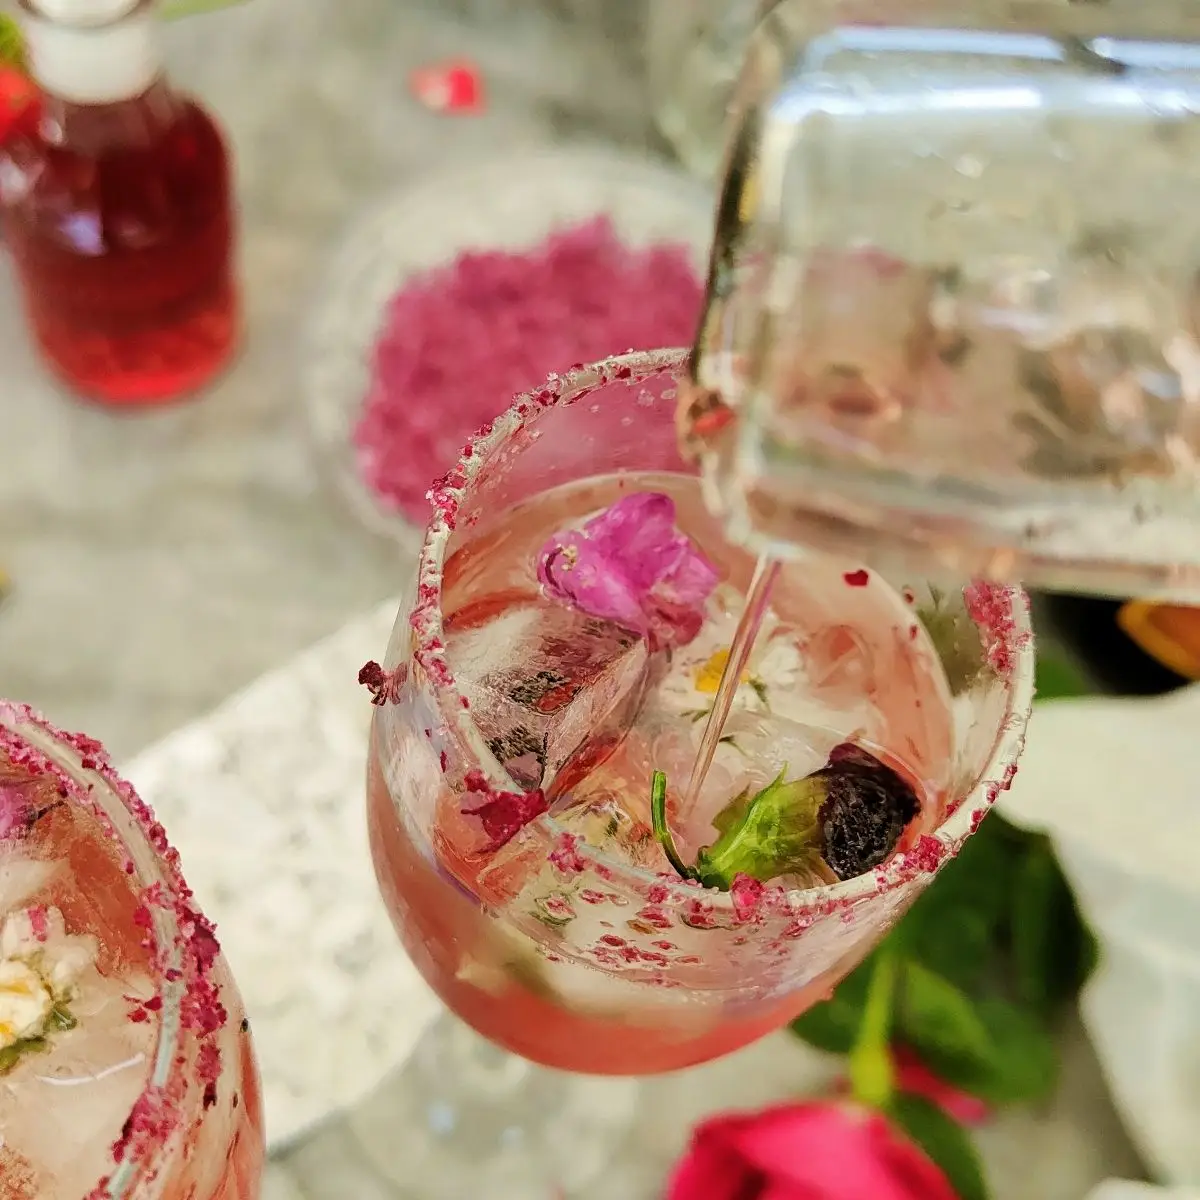 Ricetta Cocktail alle rose di _paola_catalano